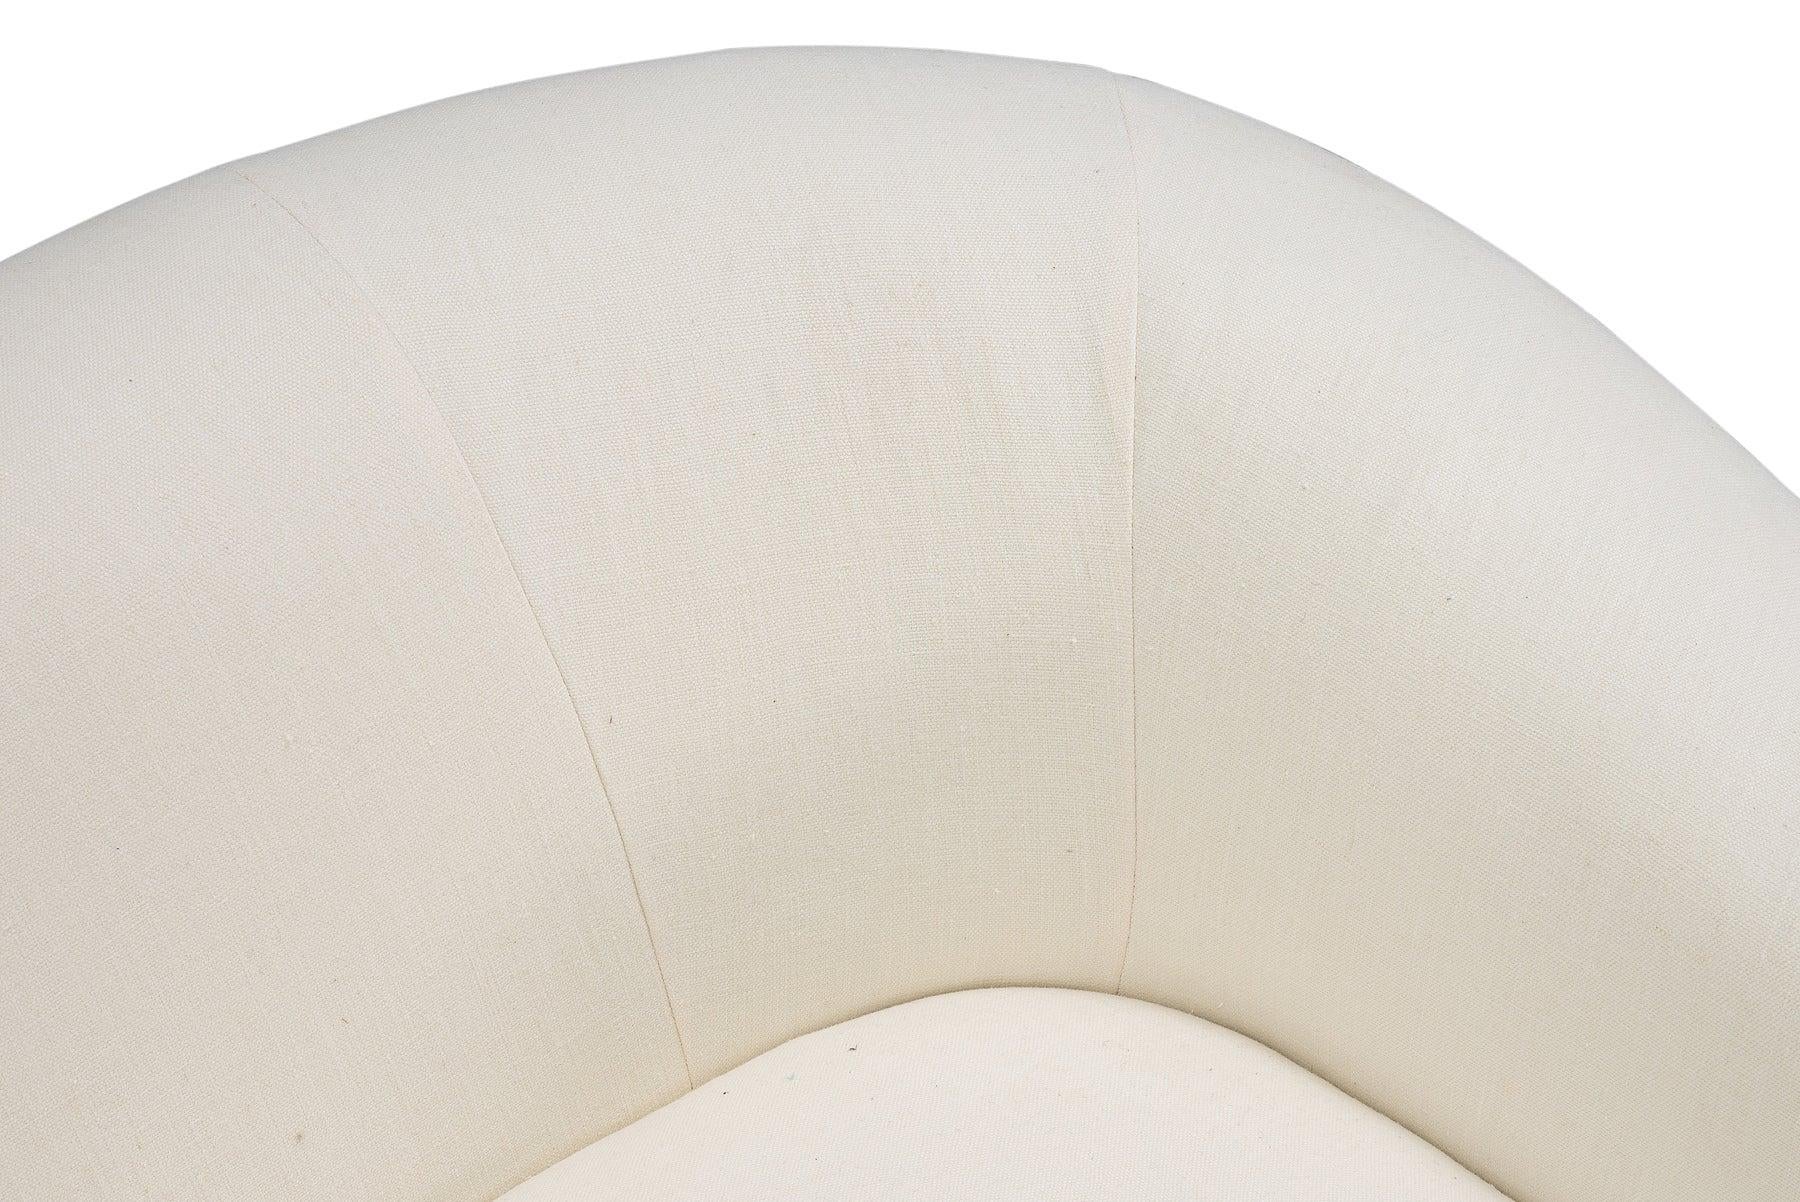 Johannes Andersen Curved Danish Modern Sofa in Walnut In Excellent Condition For Sale In Berkeley, CA